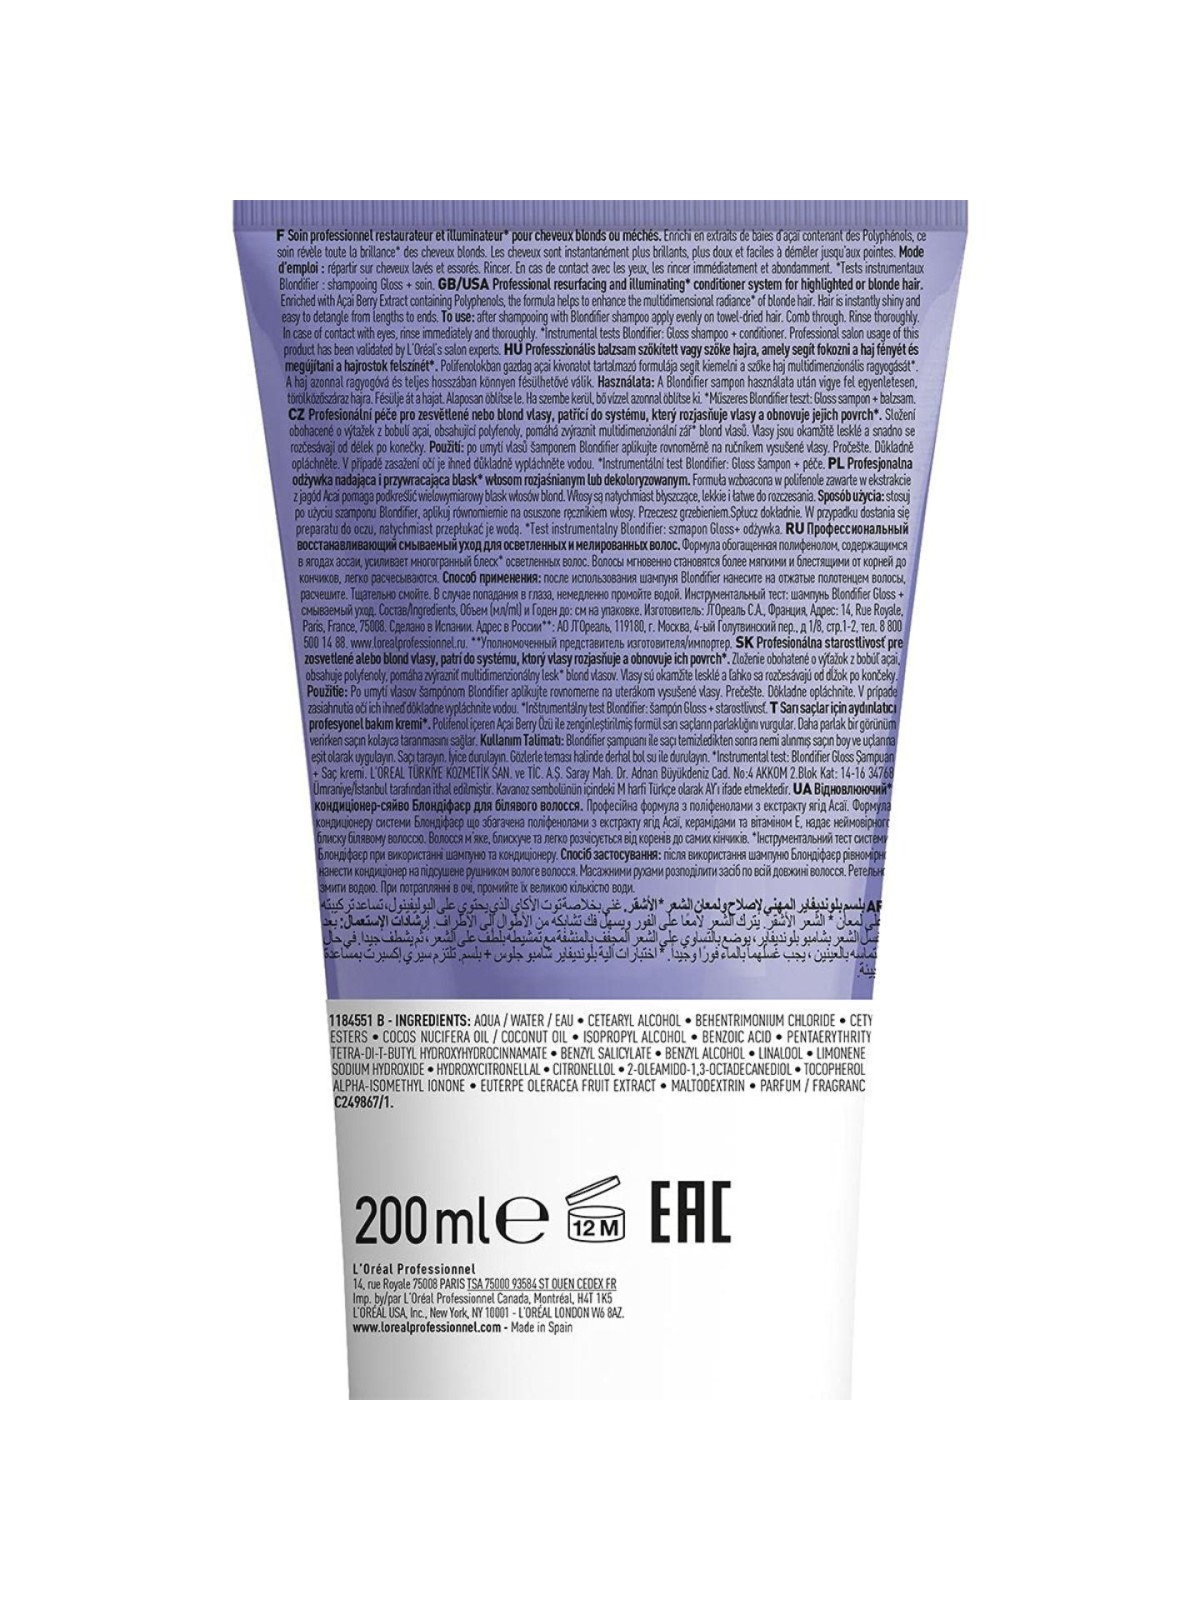 Acondicionador Blondifier Serie Expert 200 ml. L'Oréal